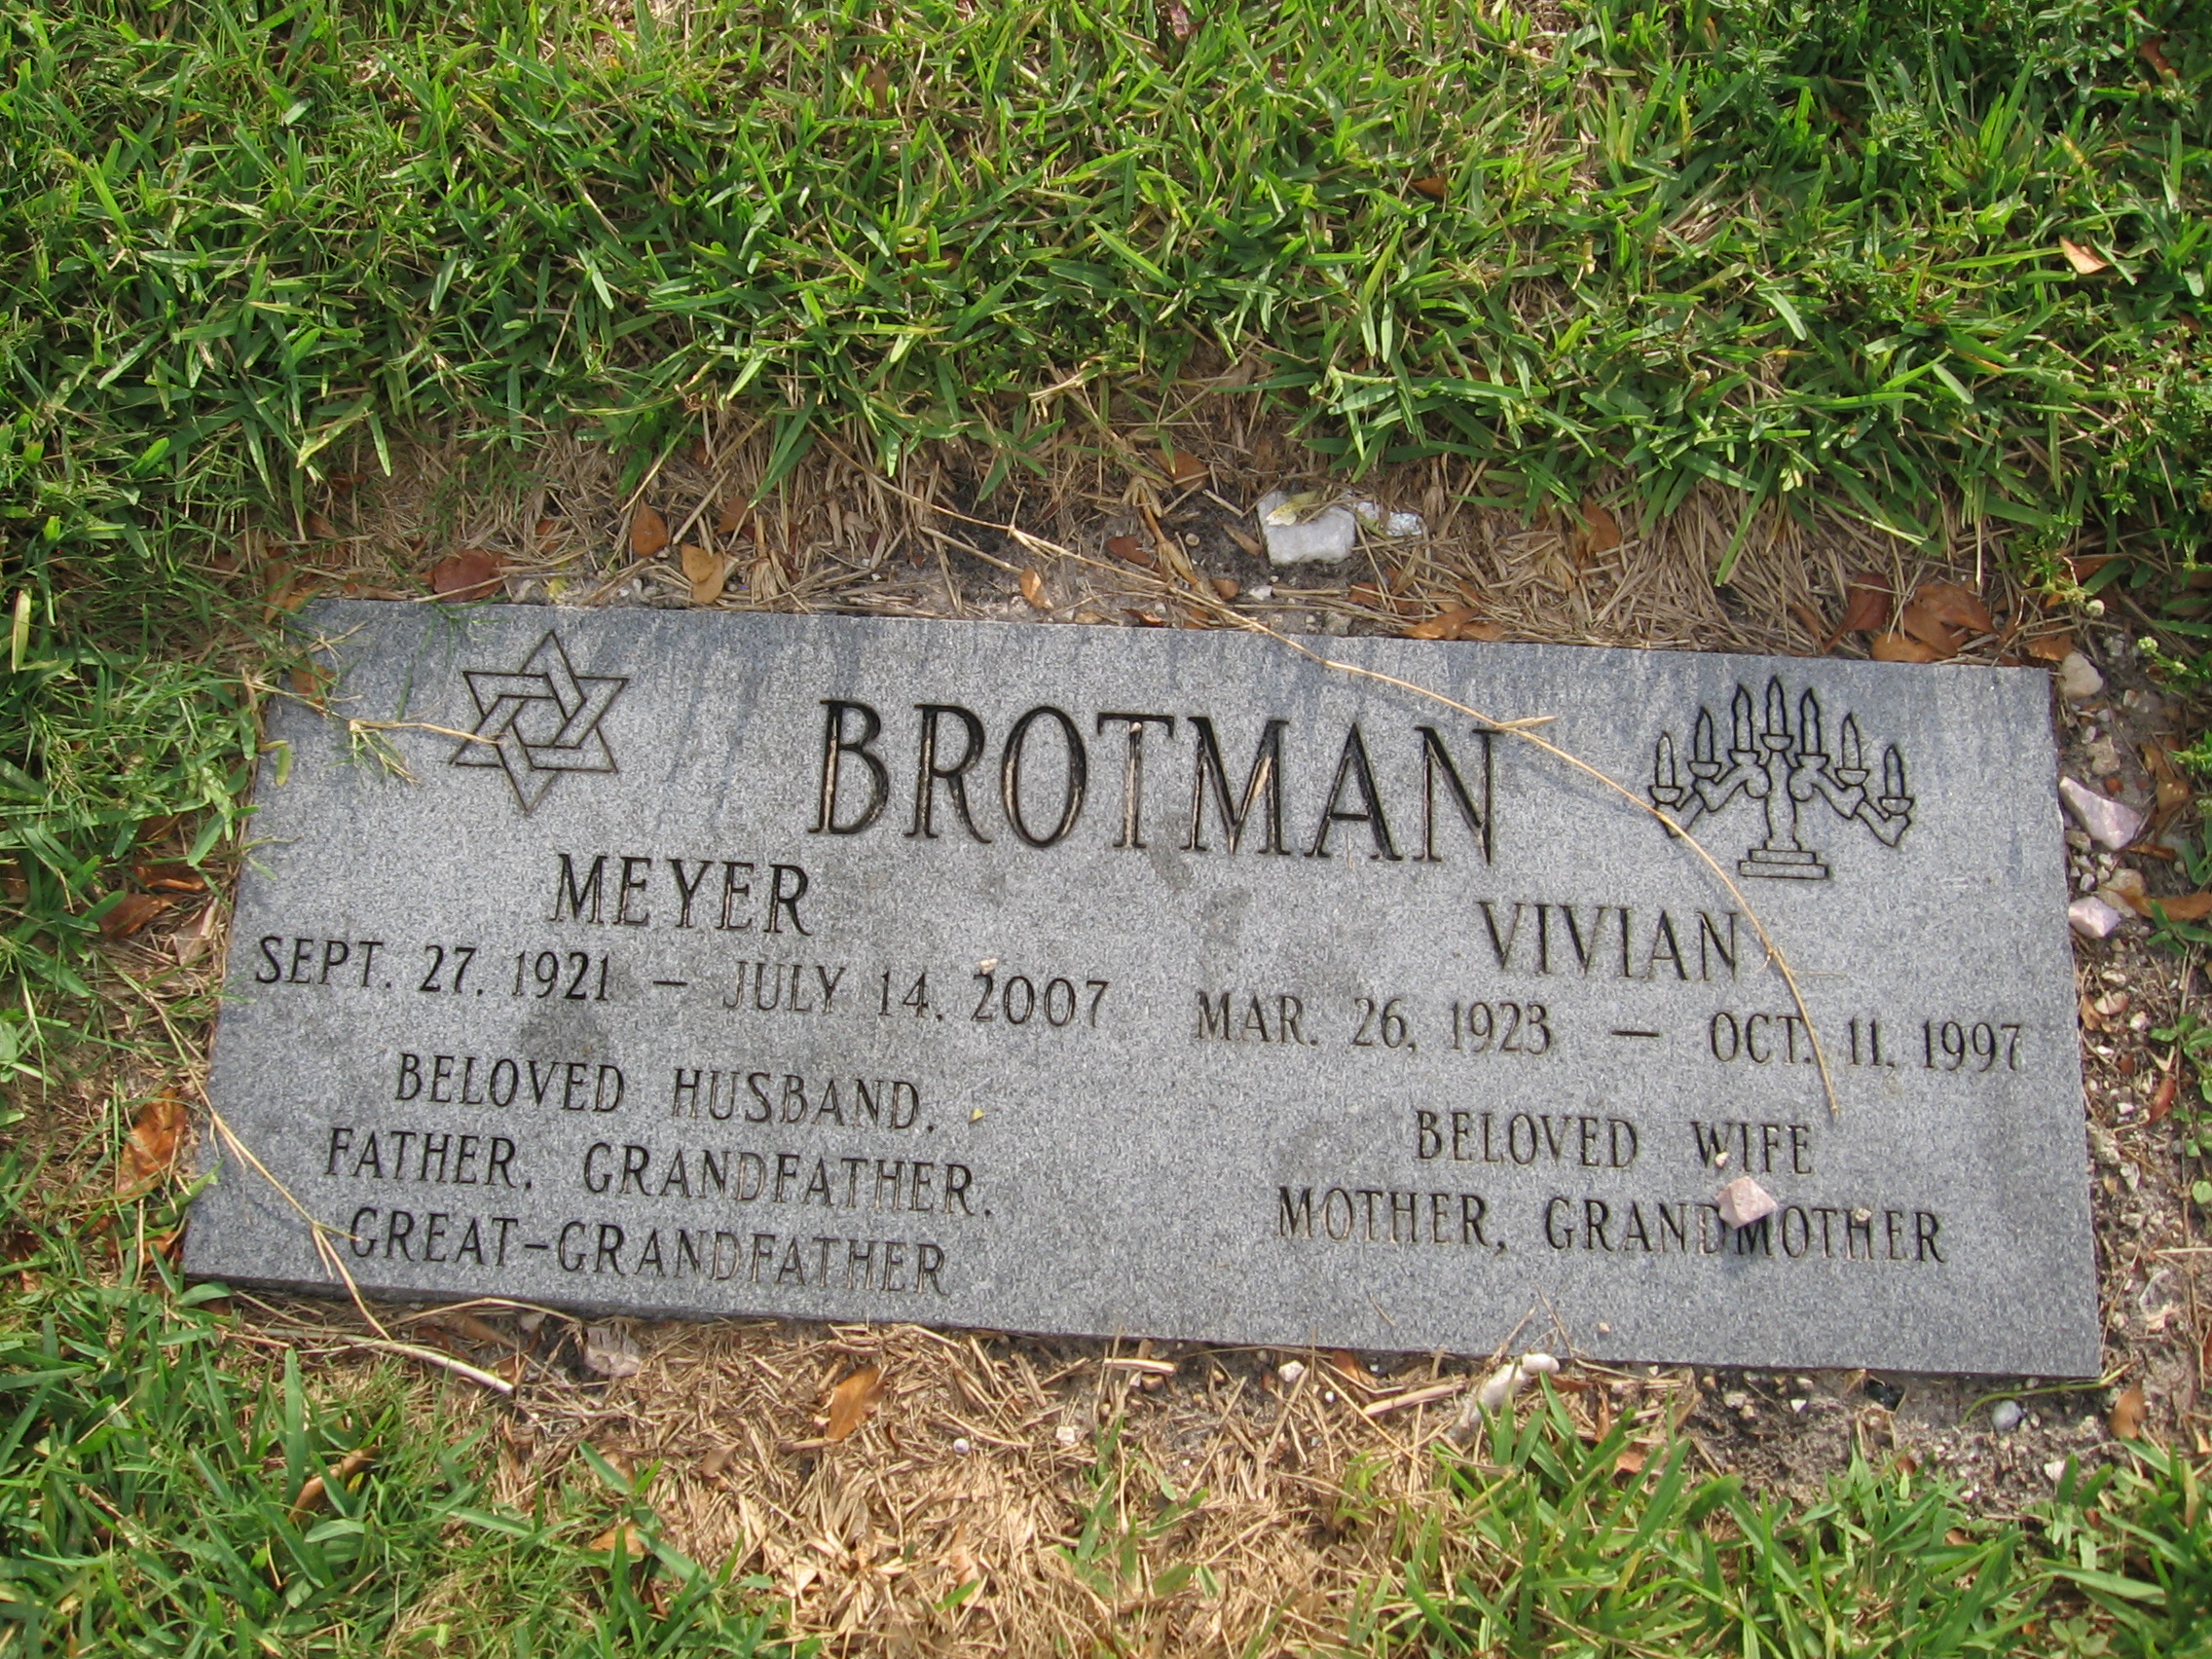 Meyer Brotman